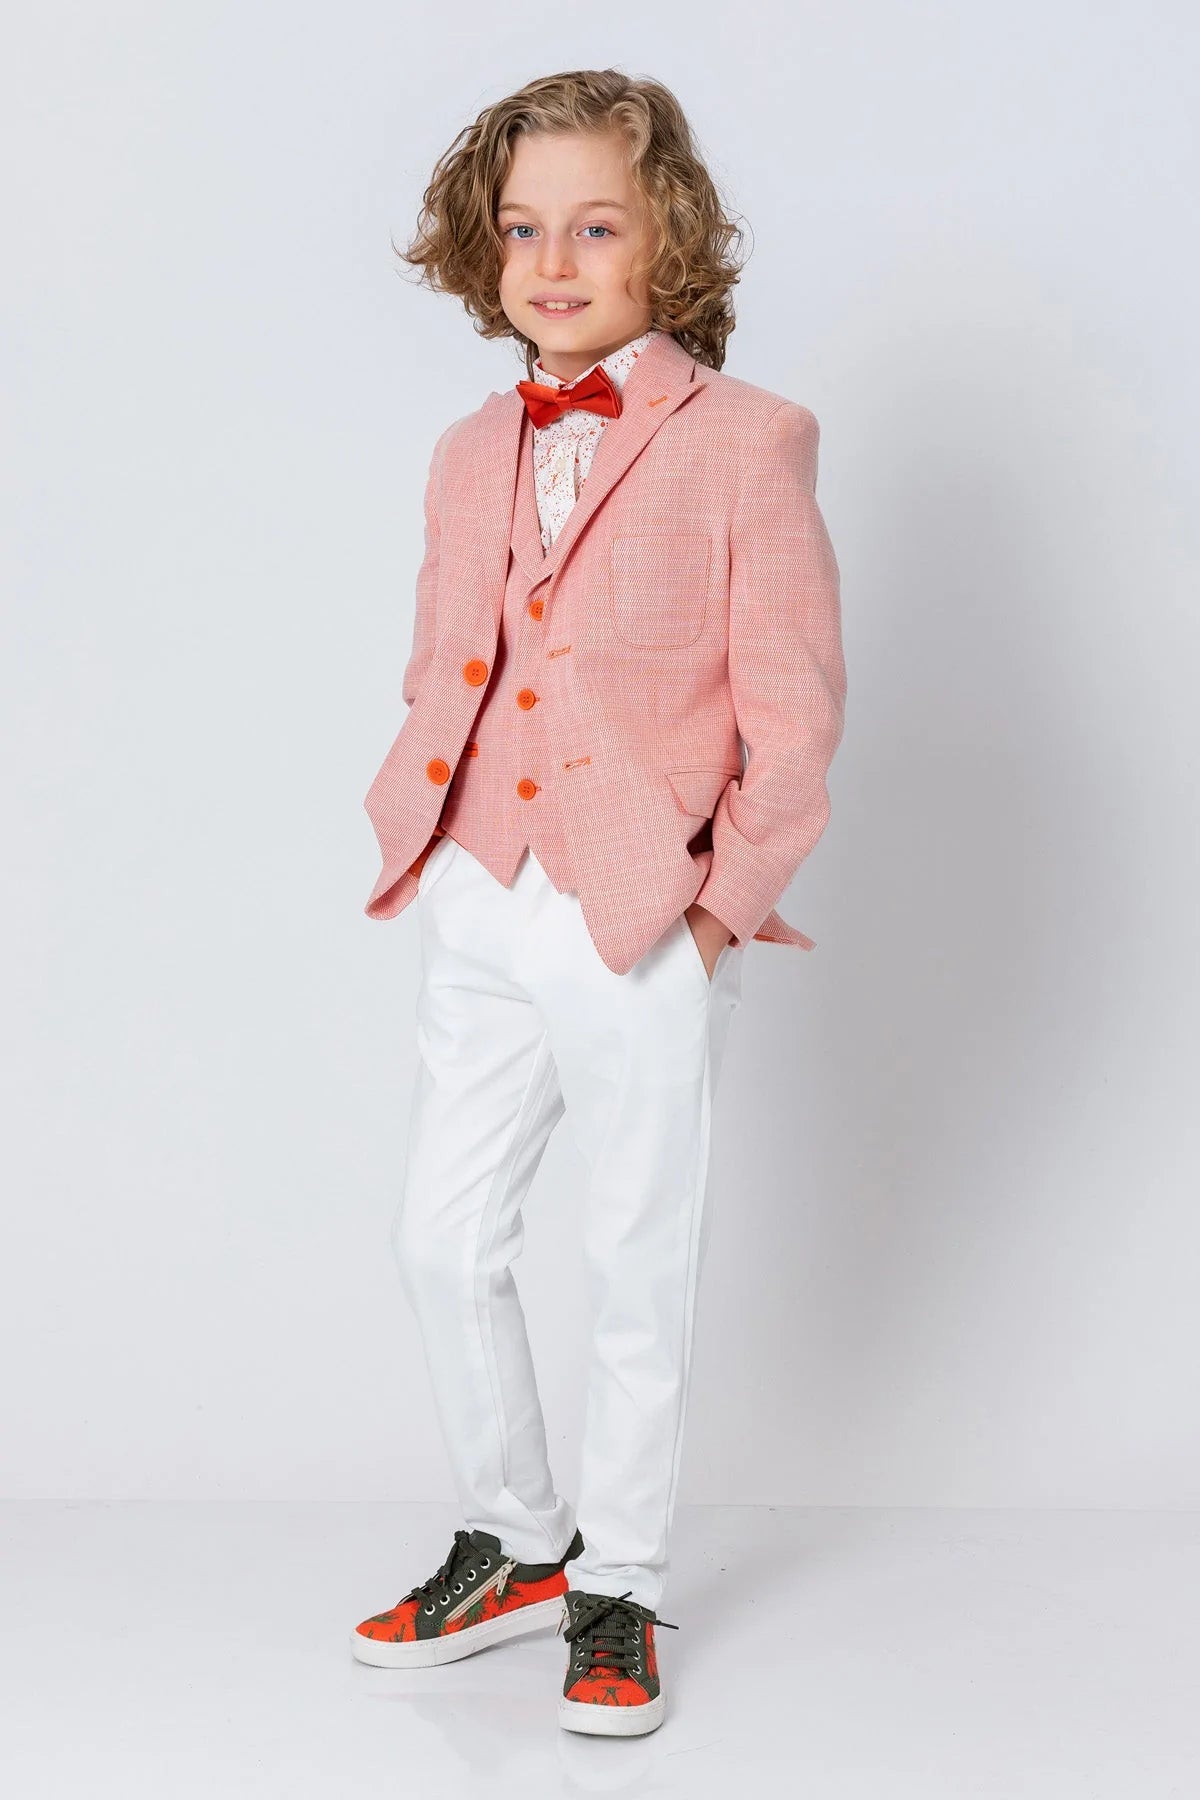 Hosiery Boys Kids Blazer Suit at Rs 600/piece in New Delhi | ID:  2852889954188